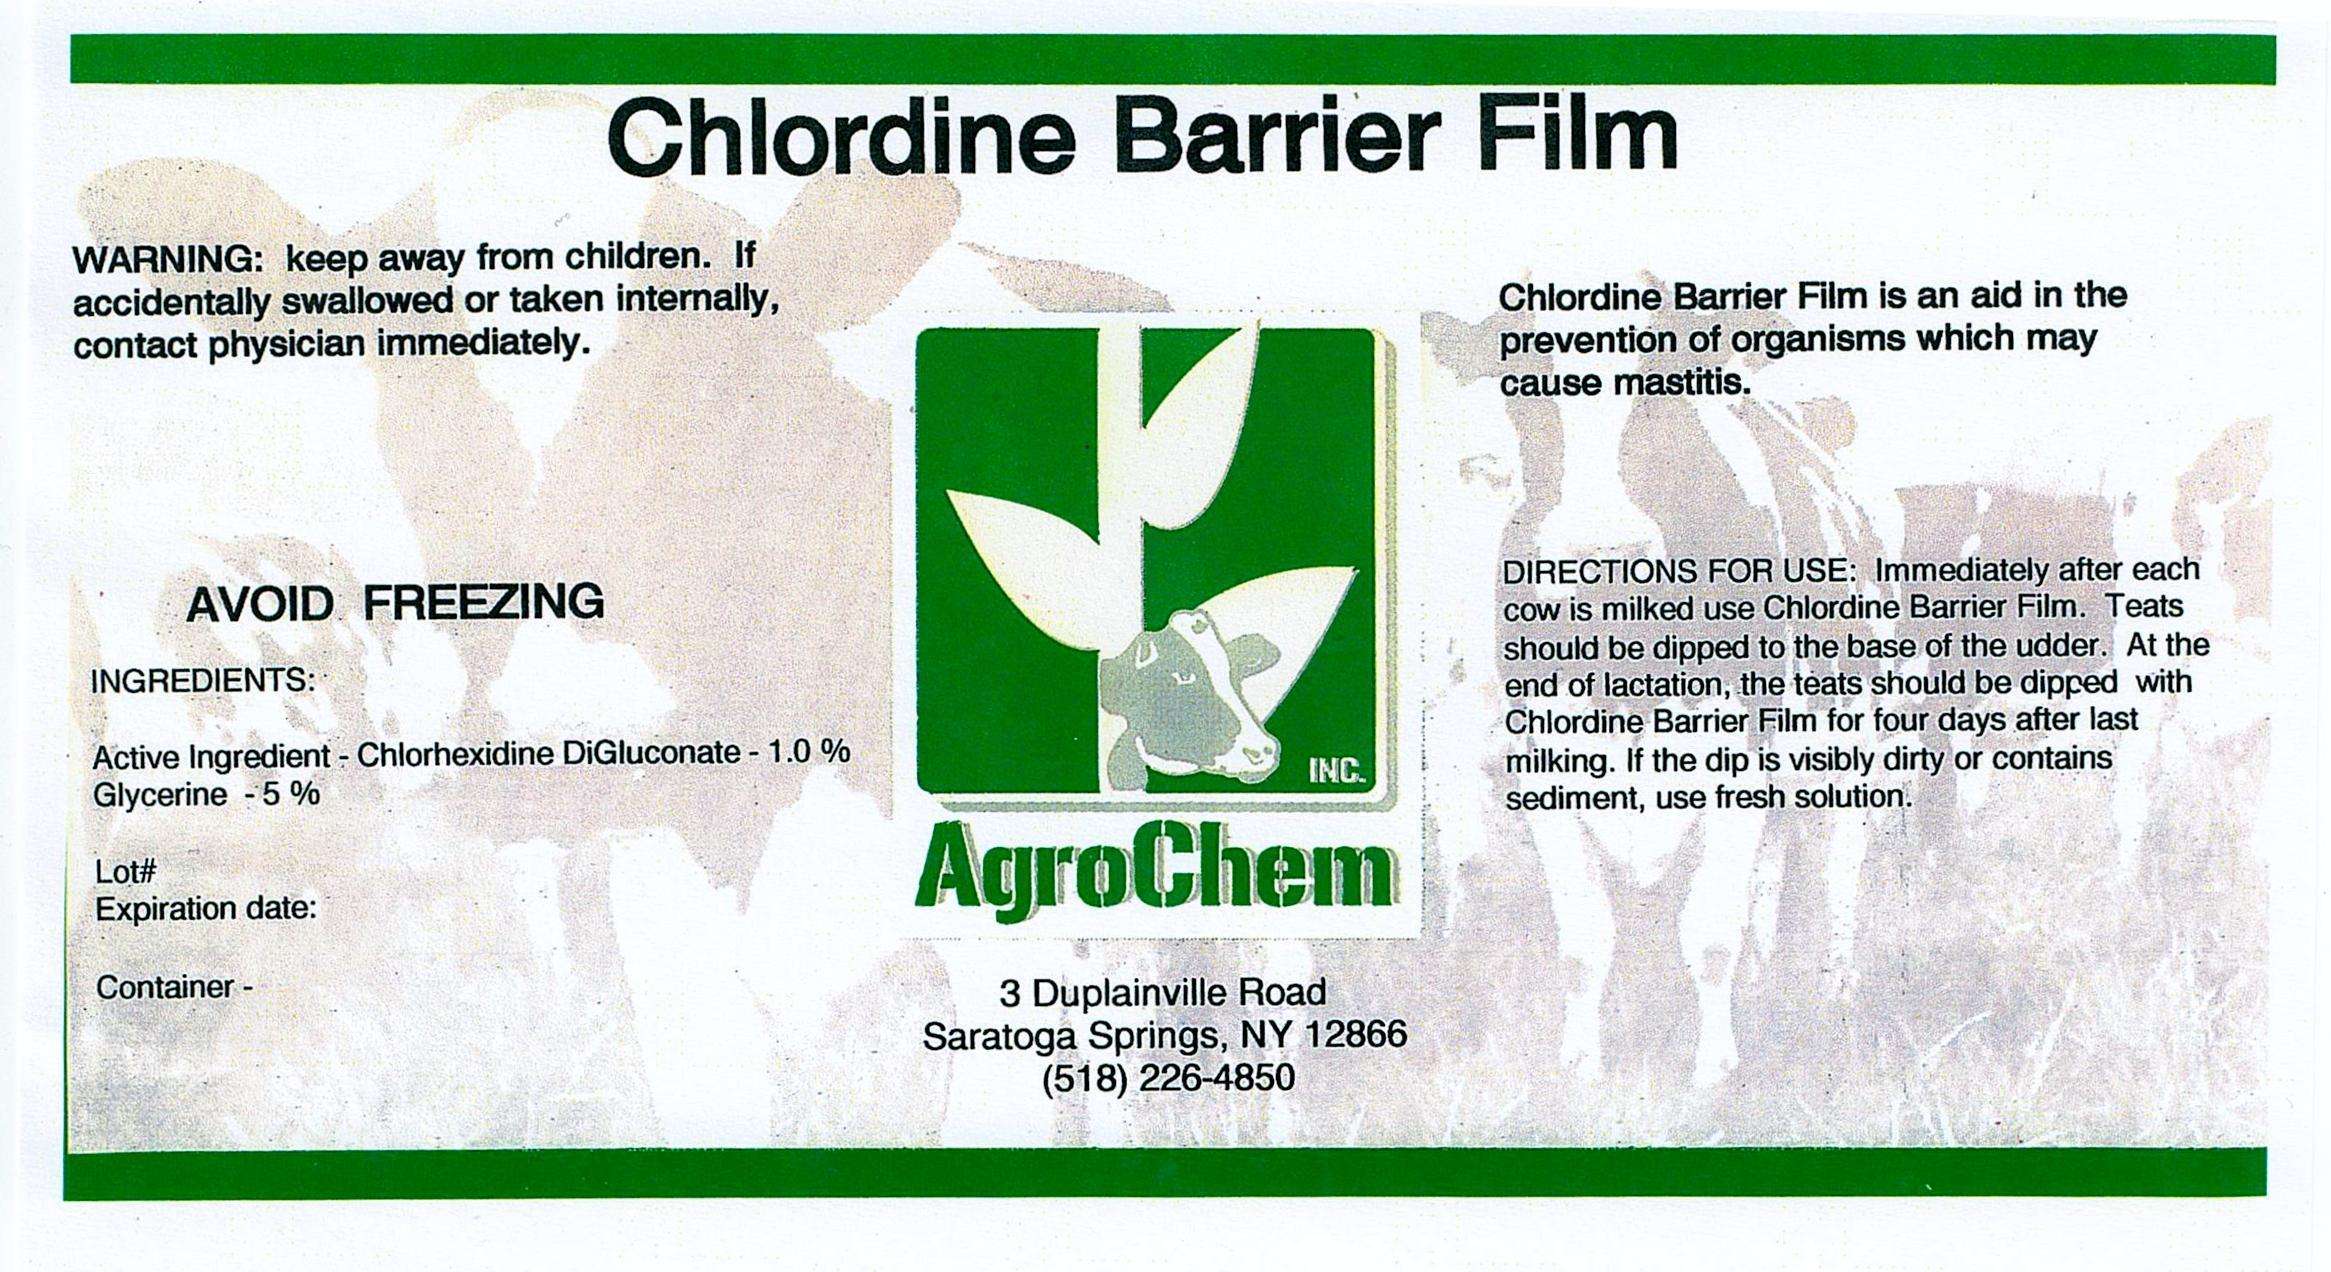 Chlordine Barrier Film